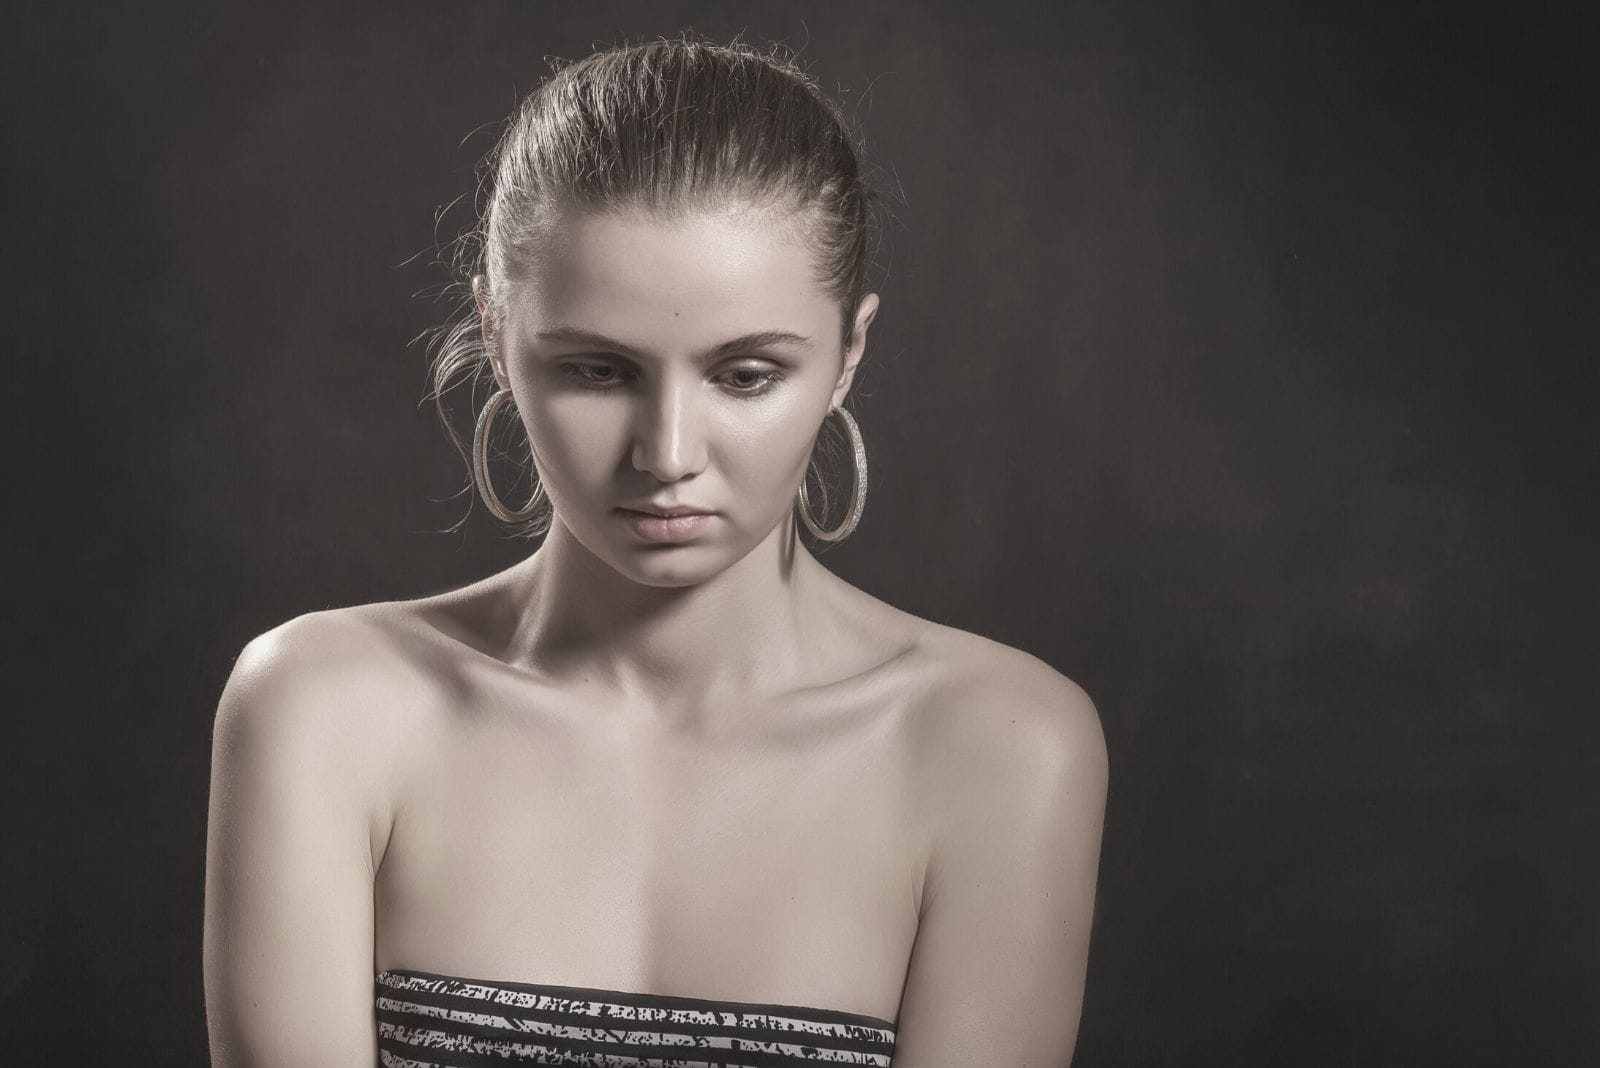 sad pensive girl on black background wearing big earrings